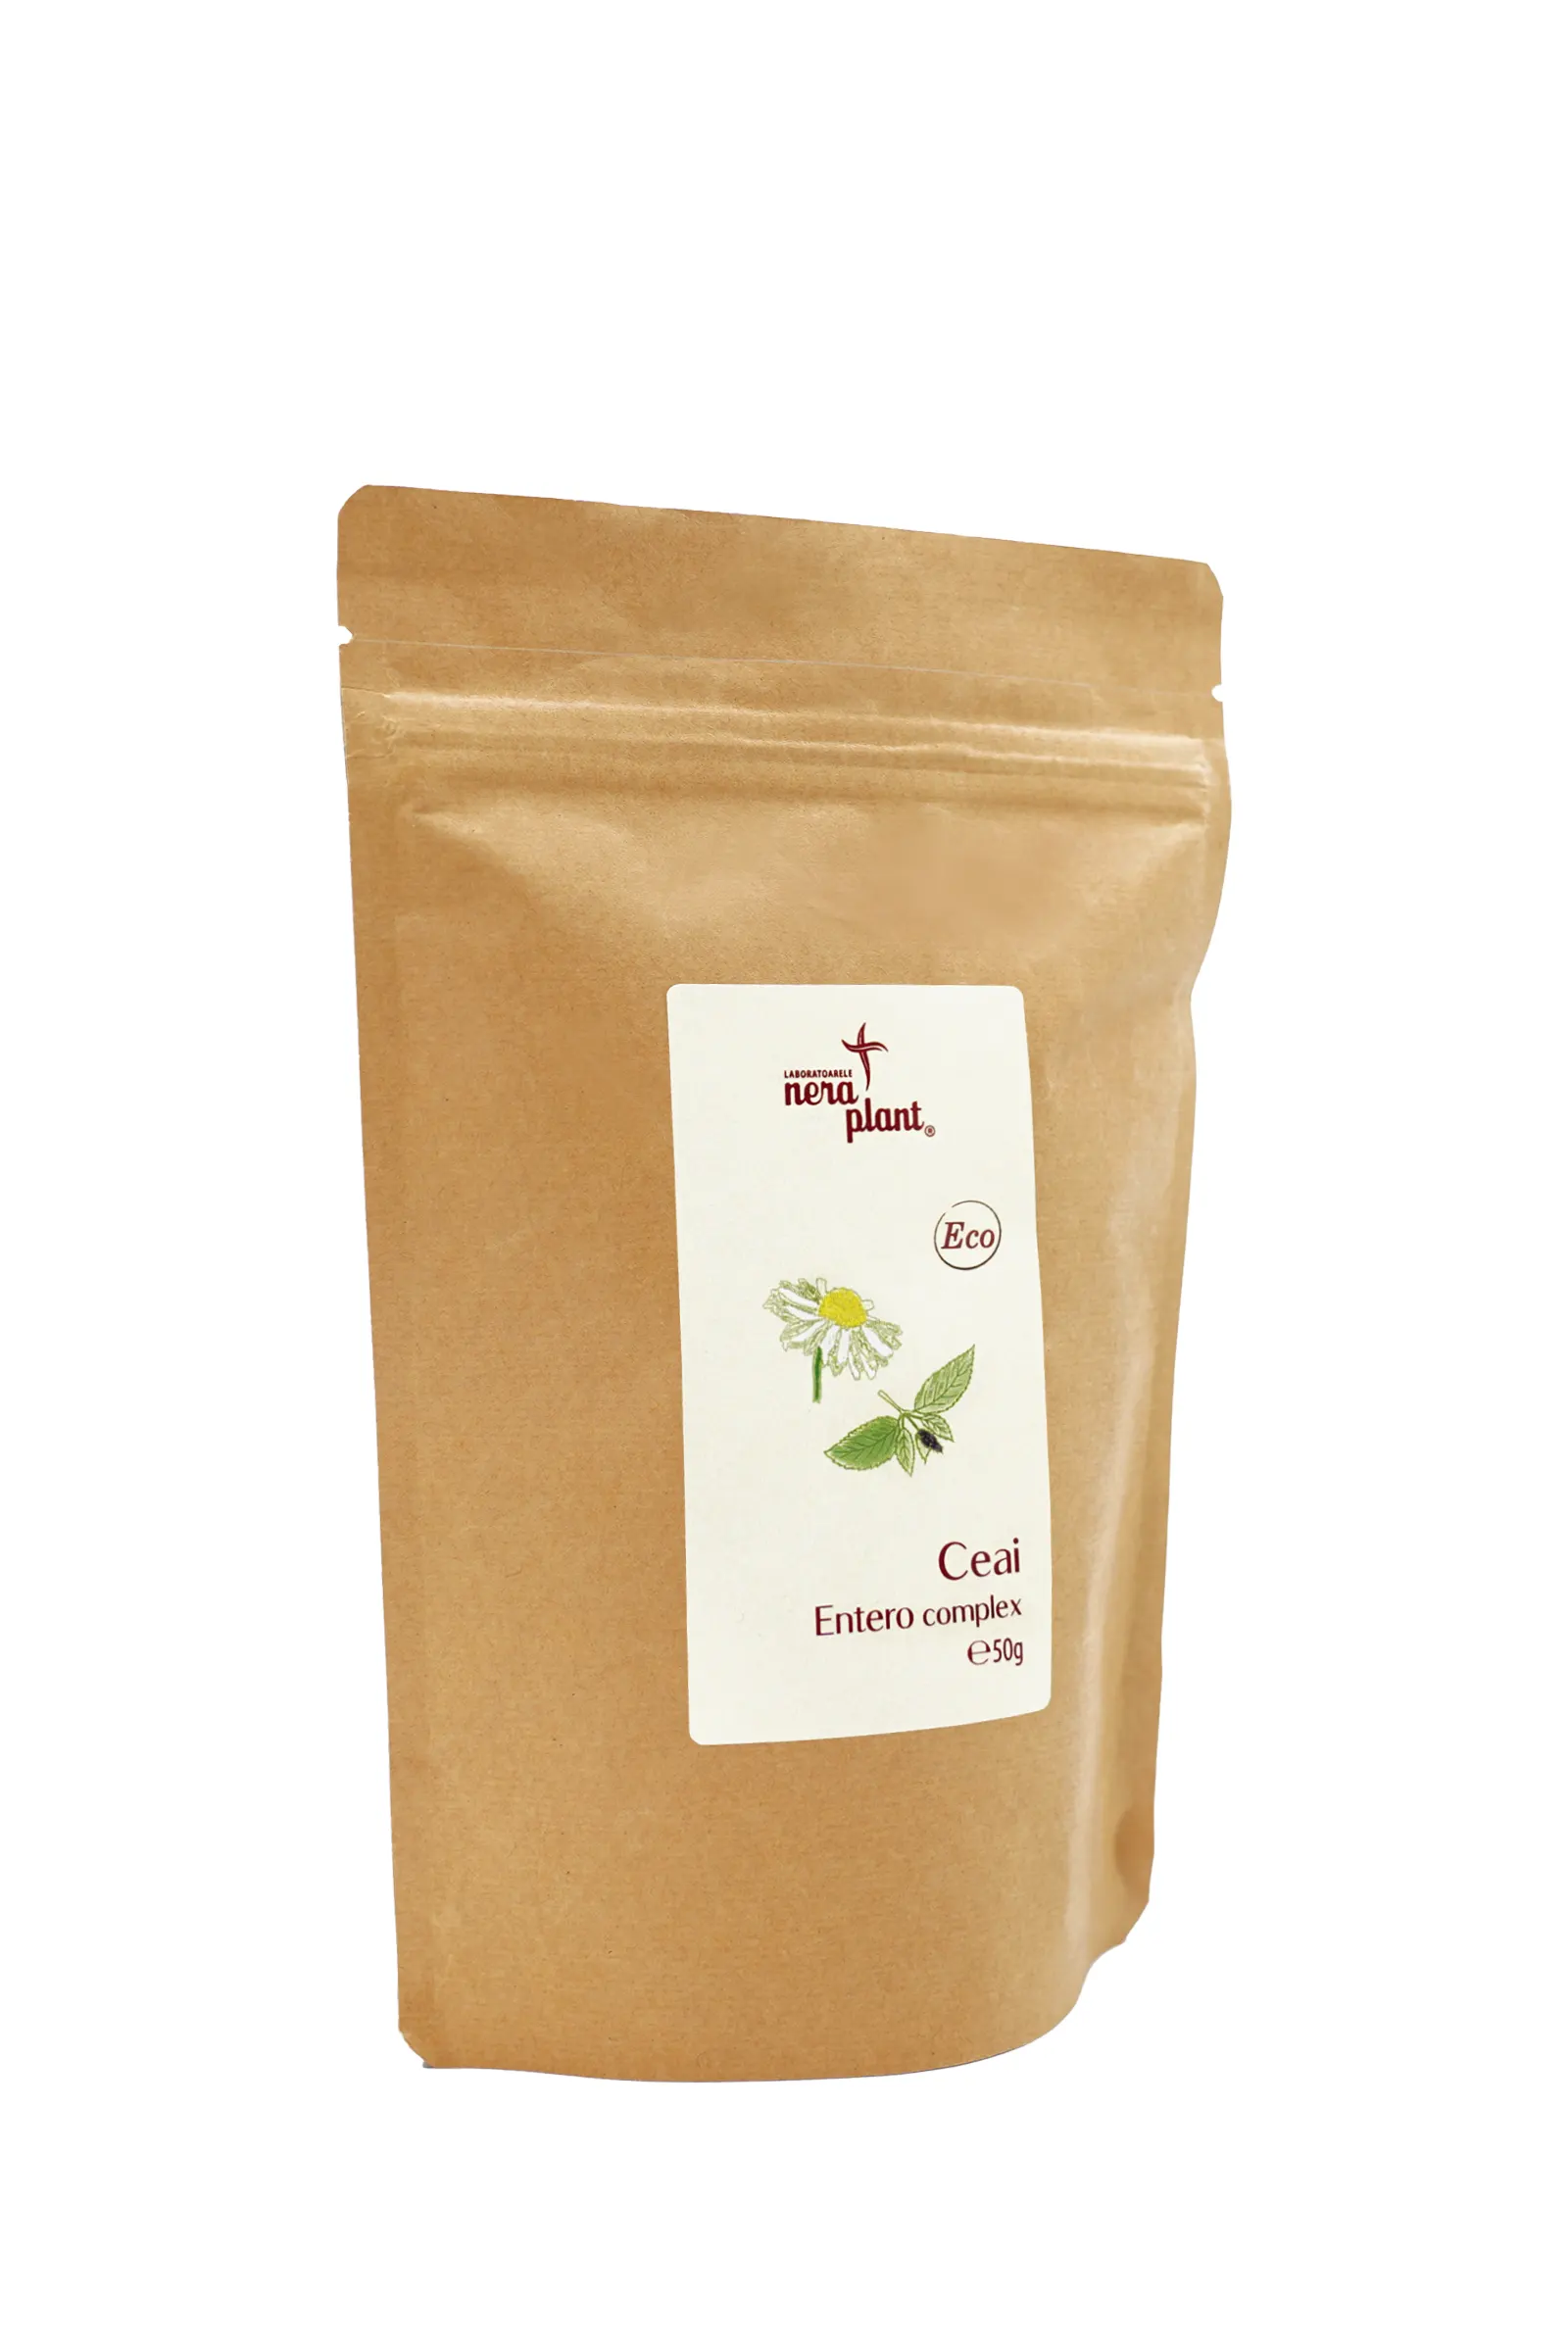 Ceai Entero-Complex ECO 50g